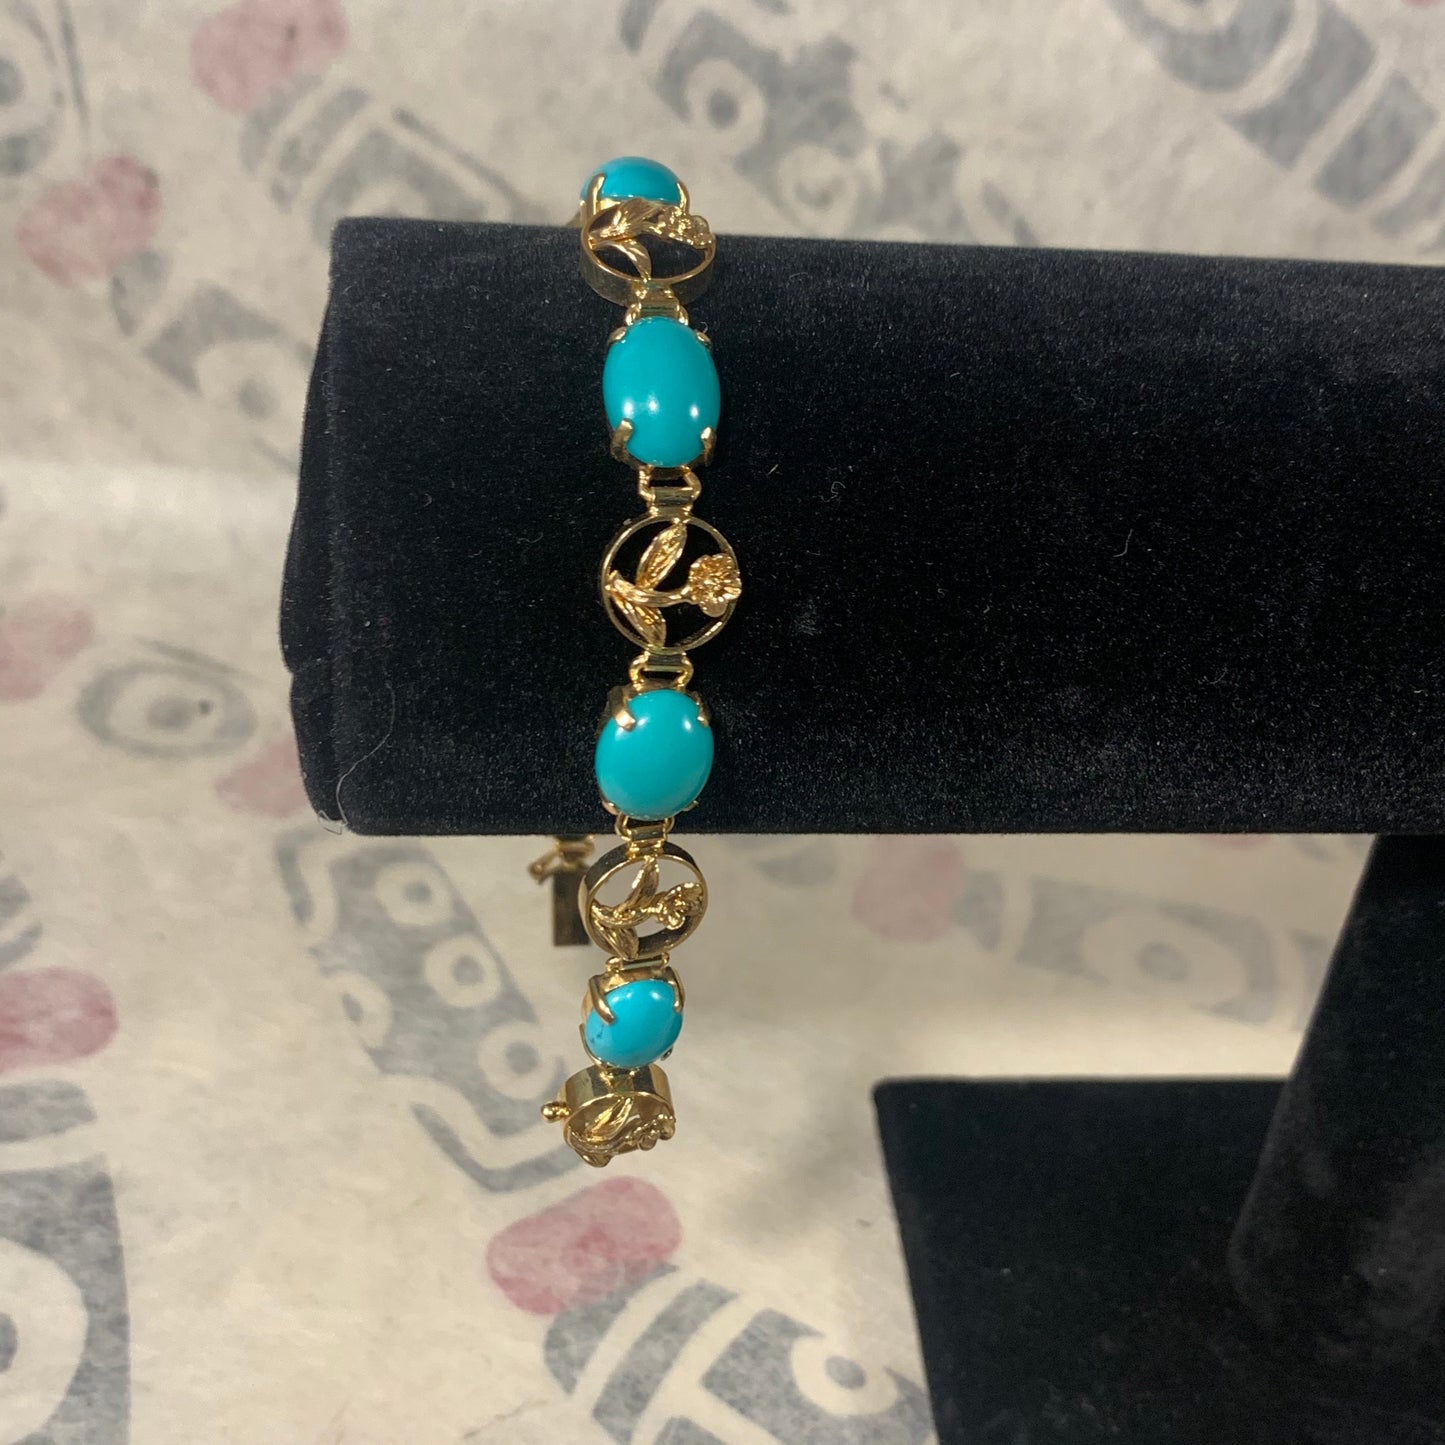 Turquoise bracelet in 14kt gold